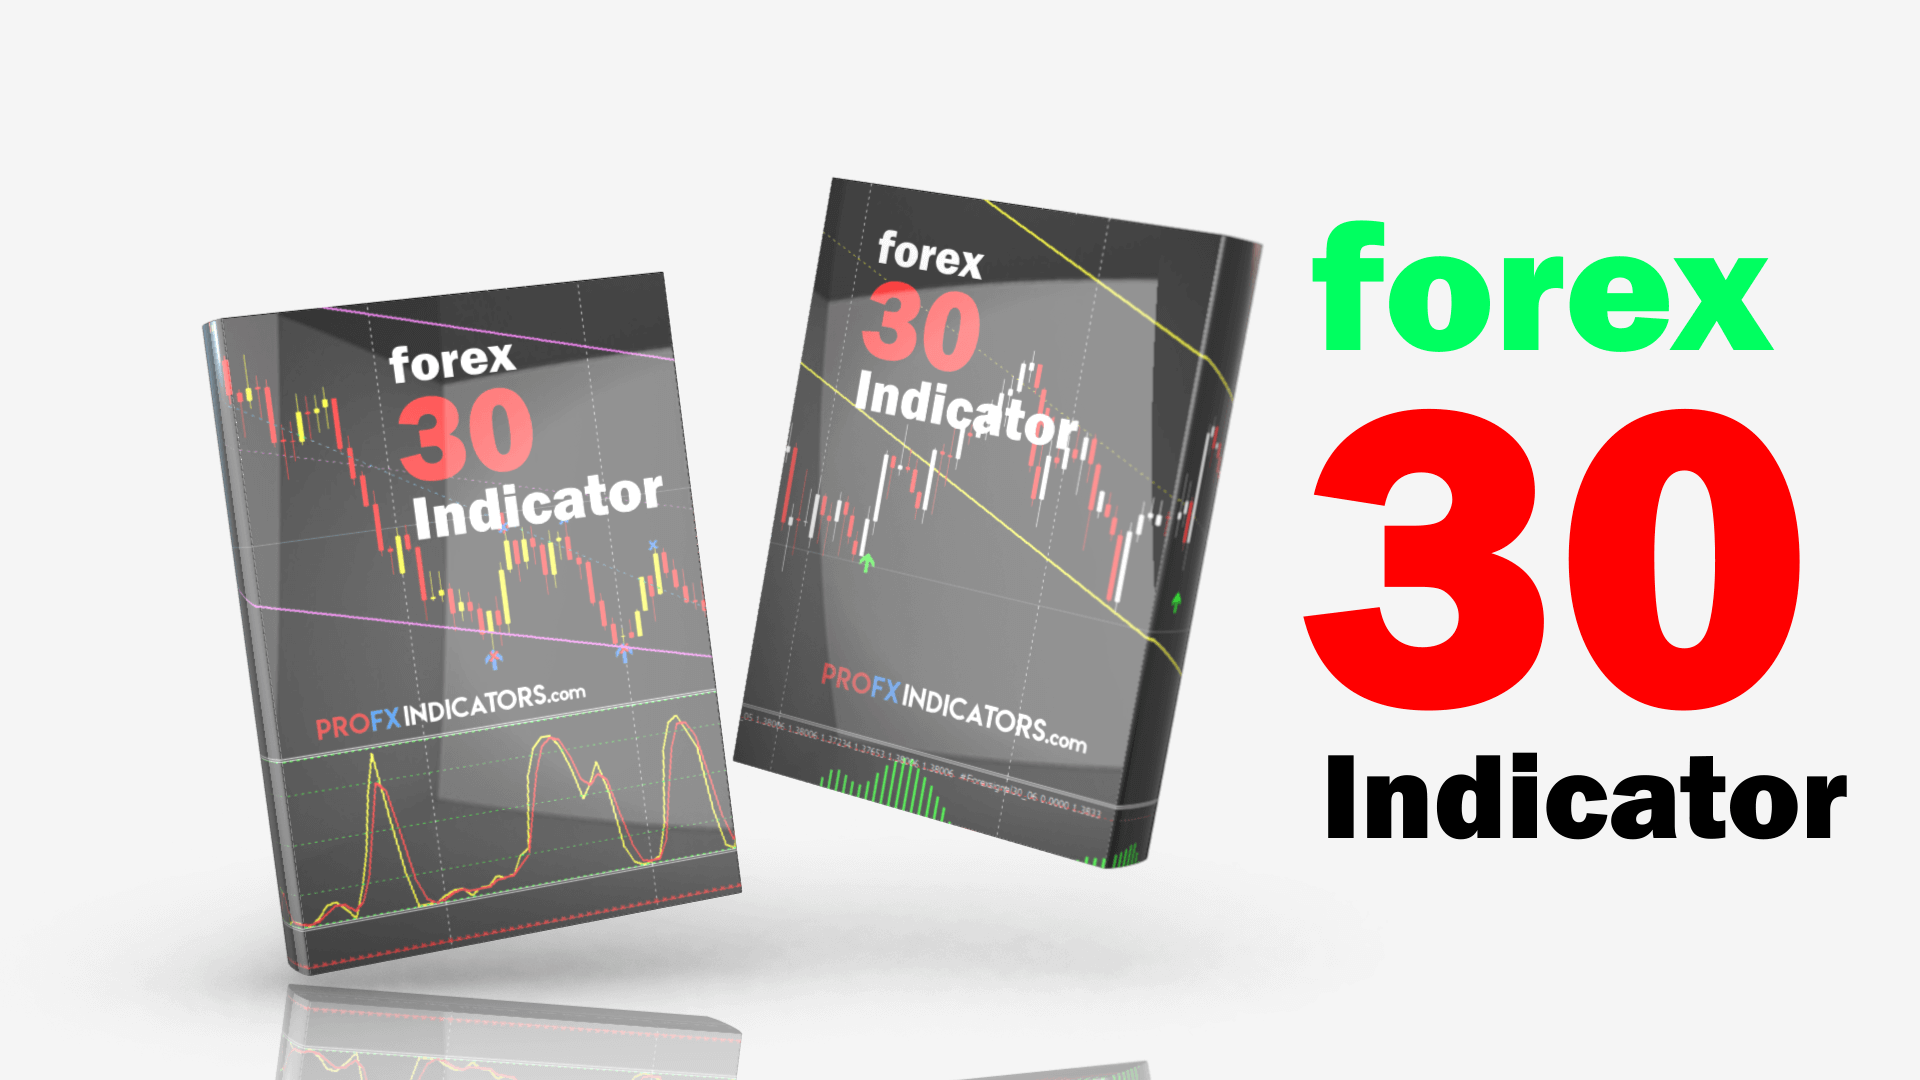 Forex 30 Indicator System